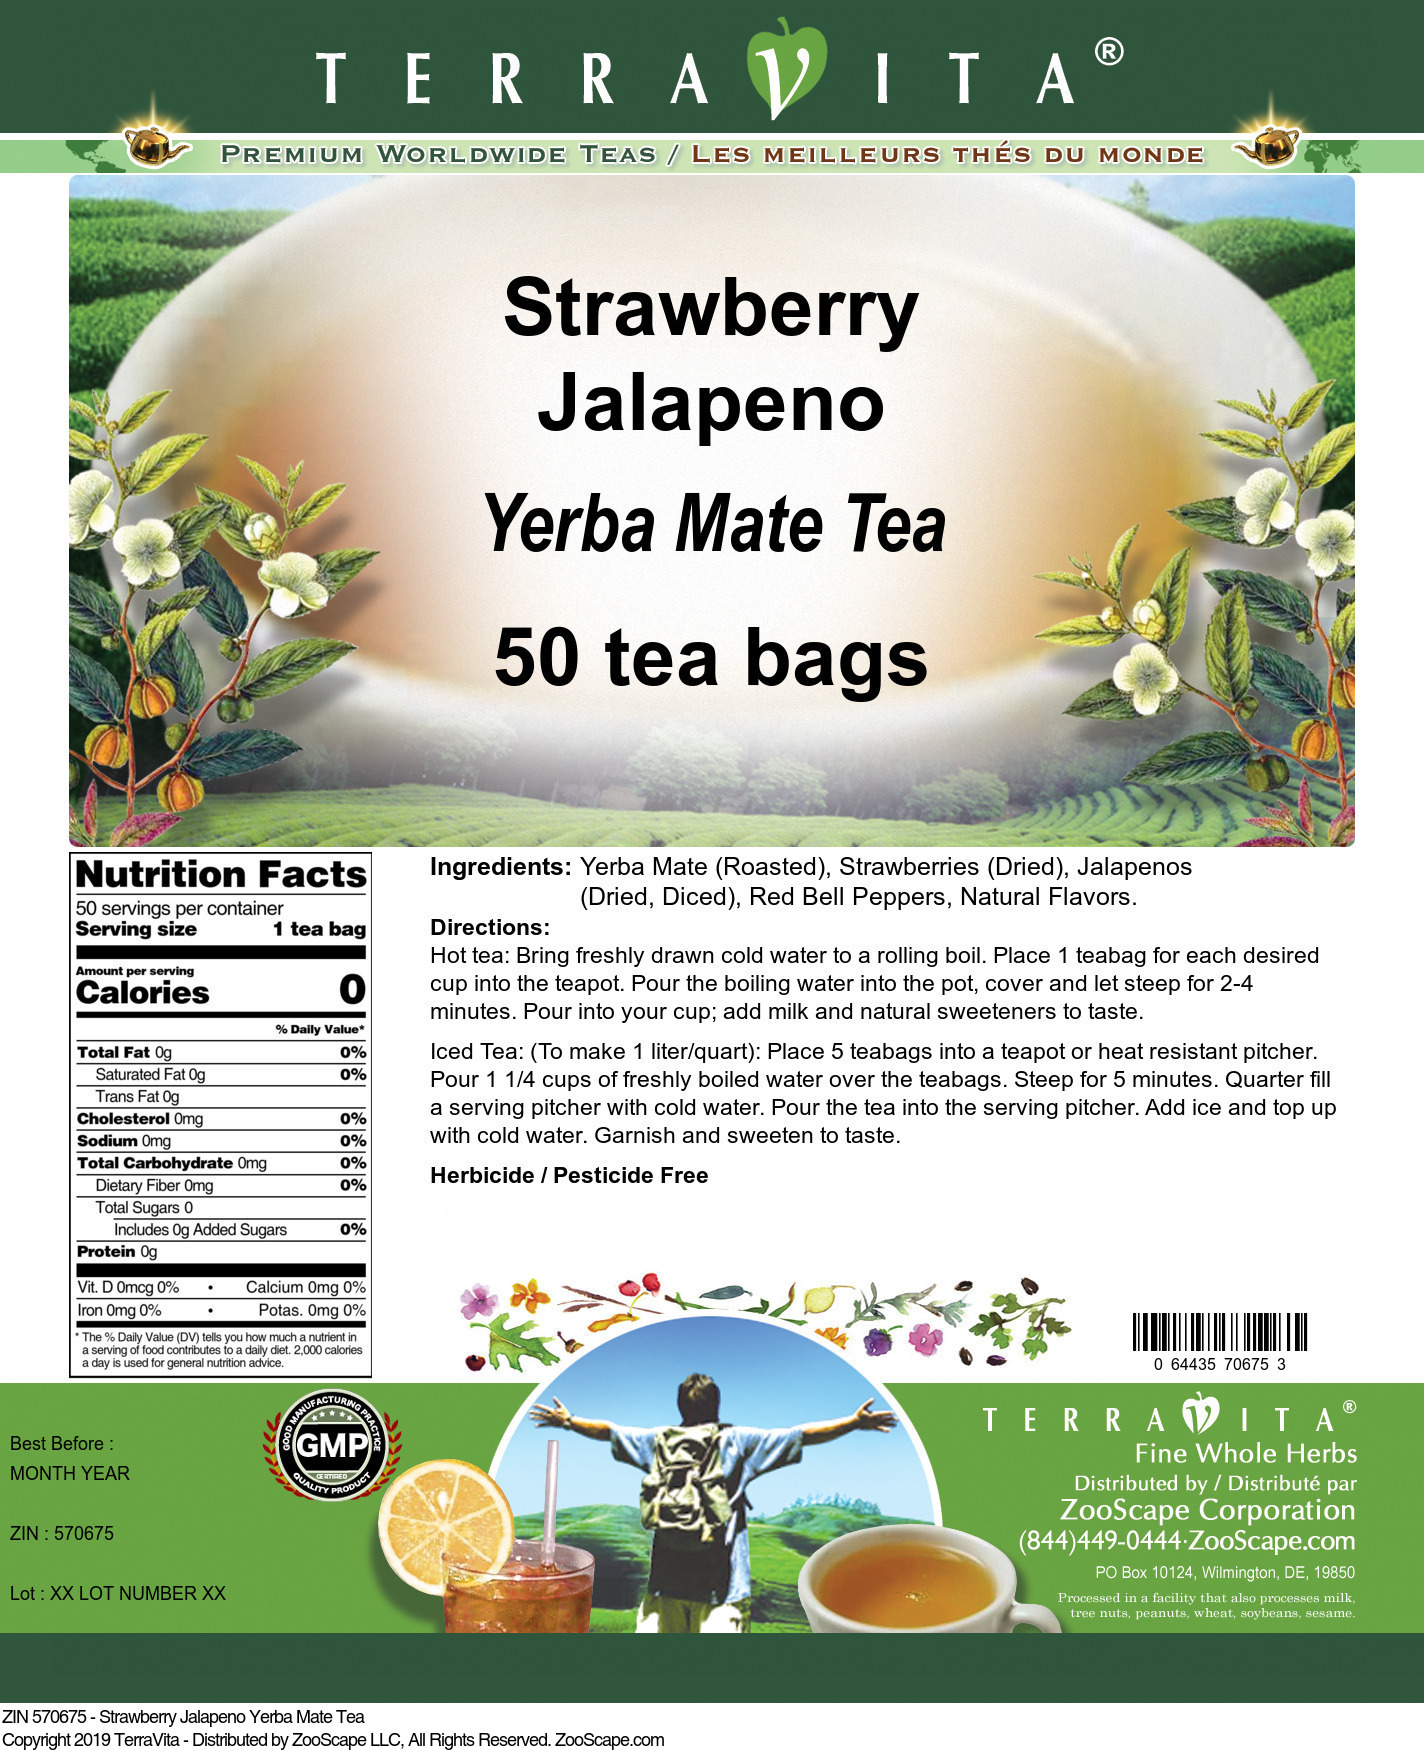 Strawberry Jalapeno Yerba Mate Tea - Label